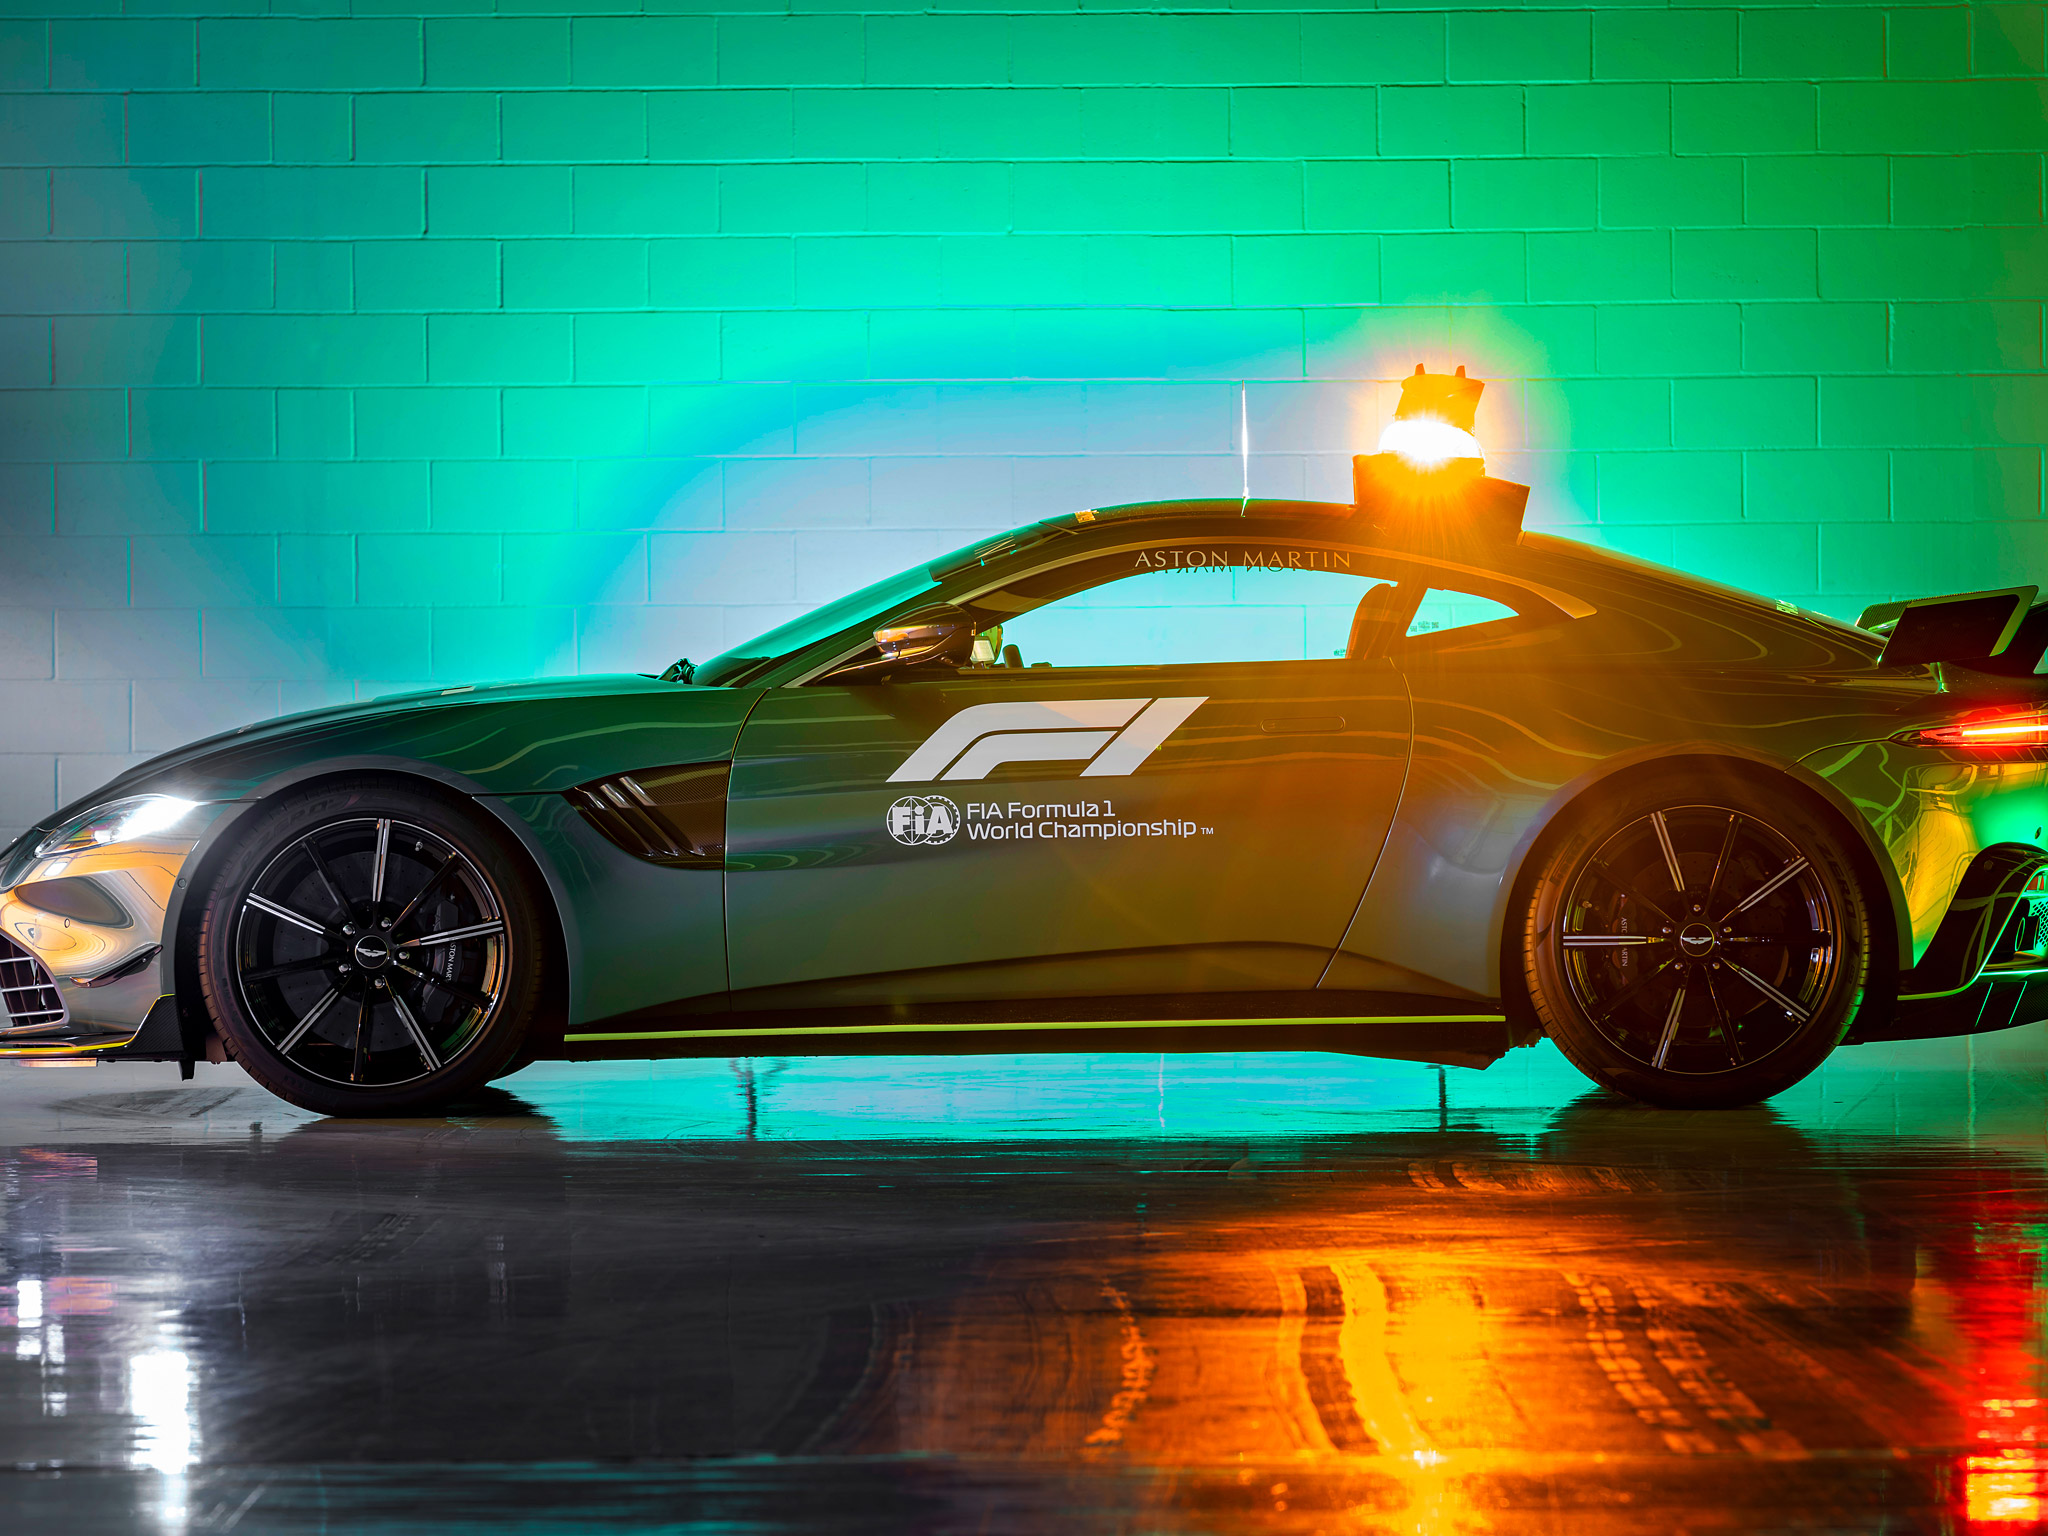  2021 Aston Martin Vantage F1 Safety Care Wallpaper.